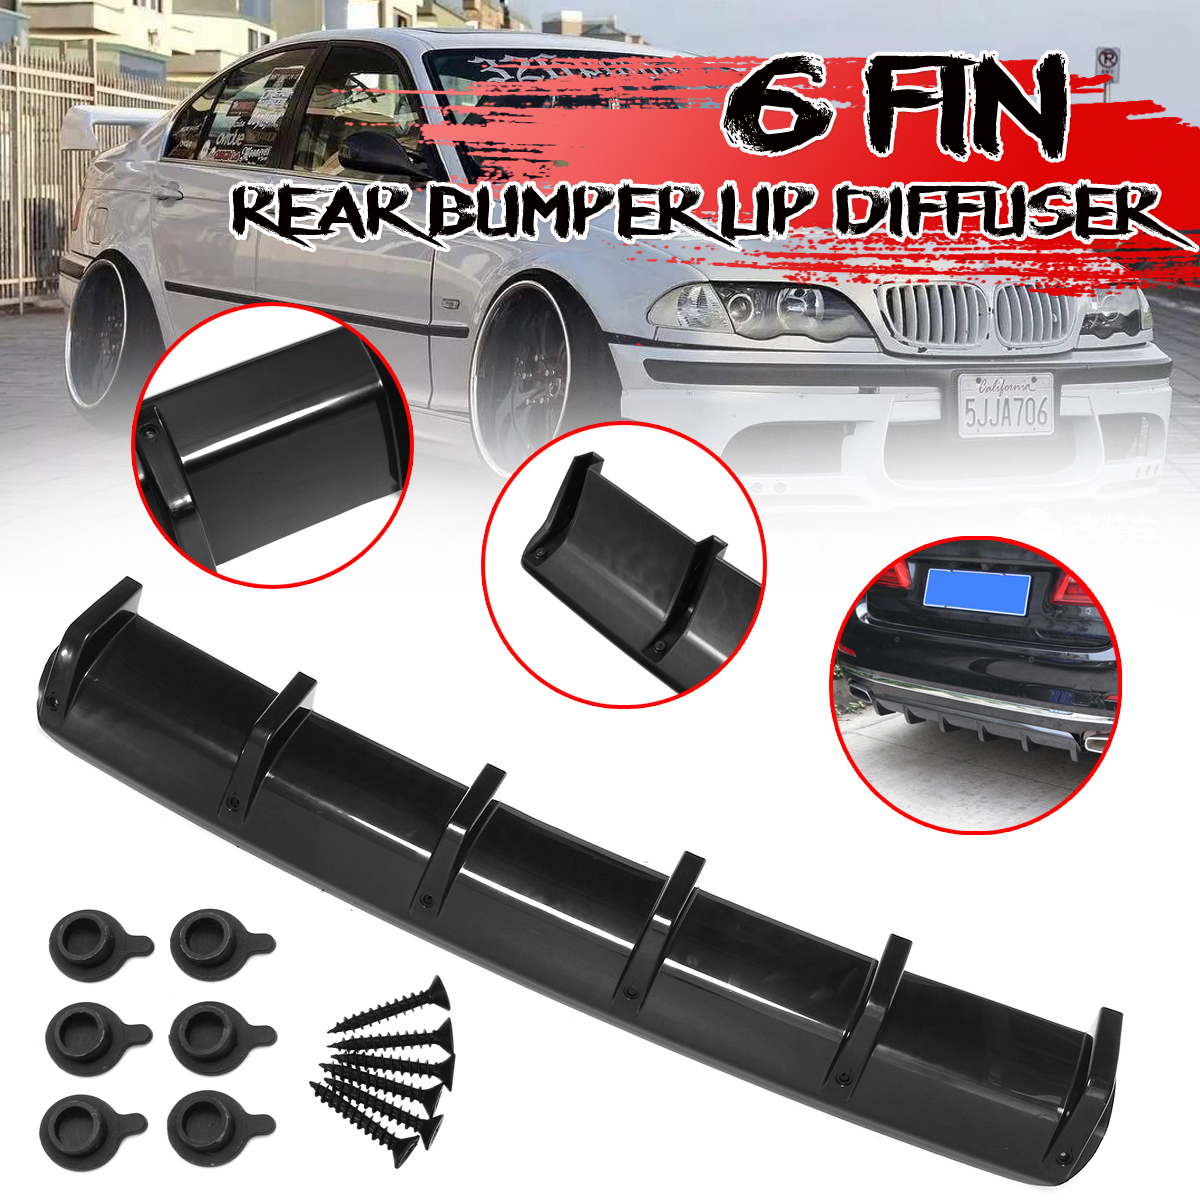 1x-6-Universal-Black-ABS-Fin-Car-Rear-Bumper-Lip-Diffuser-Scratch-Protector-Cover-Molding-Trim-1495930